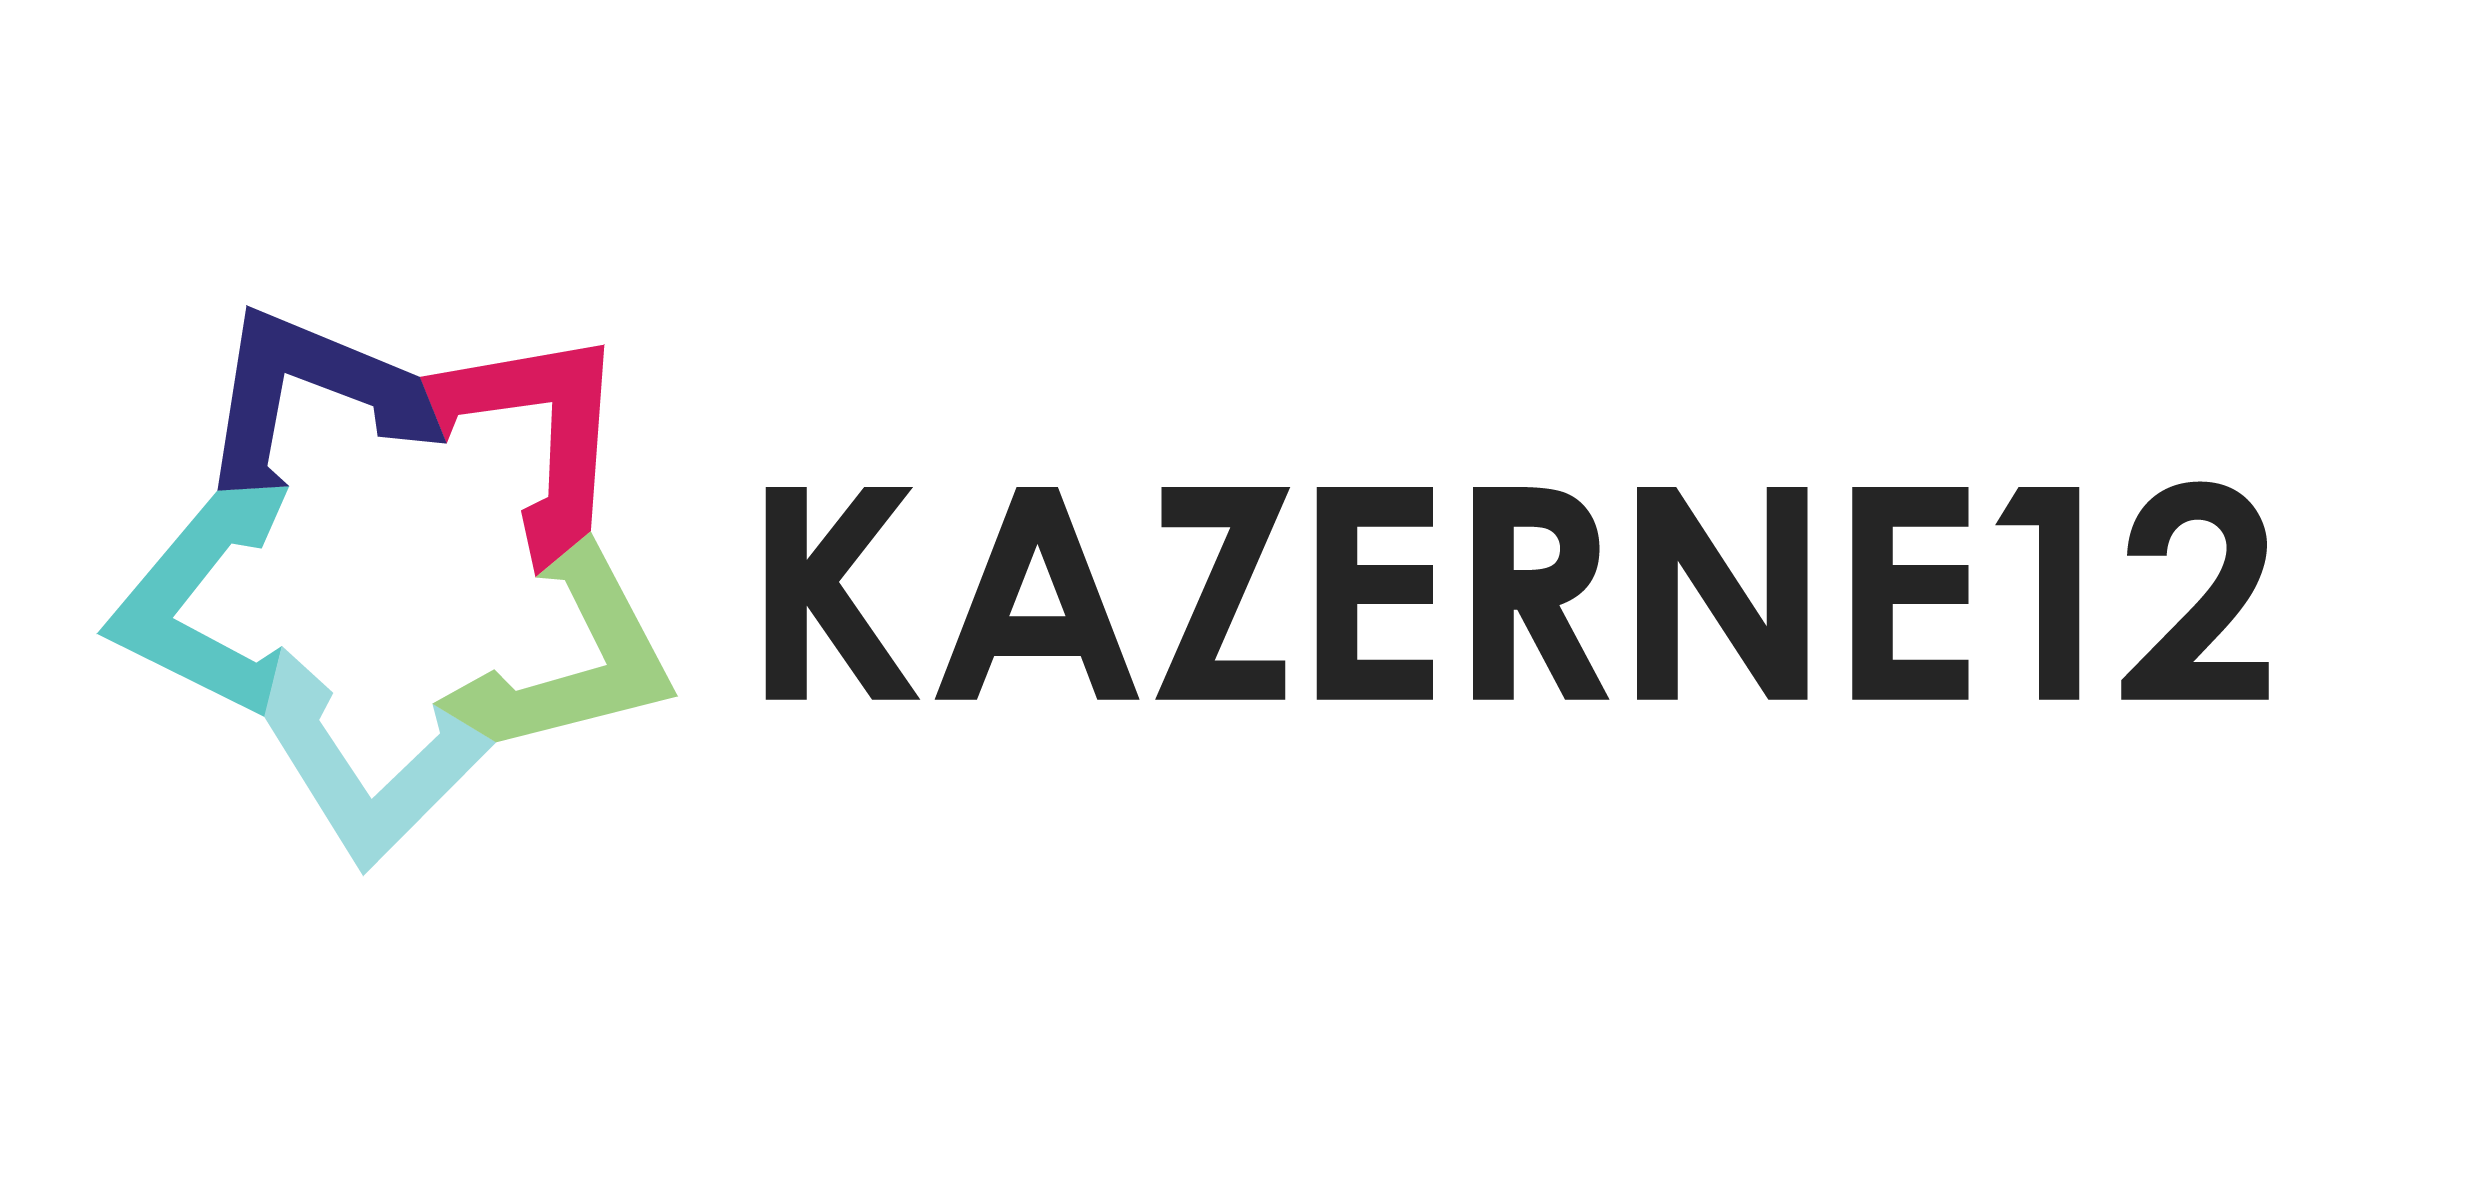 Kazerne12 - Logo Design